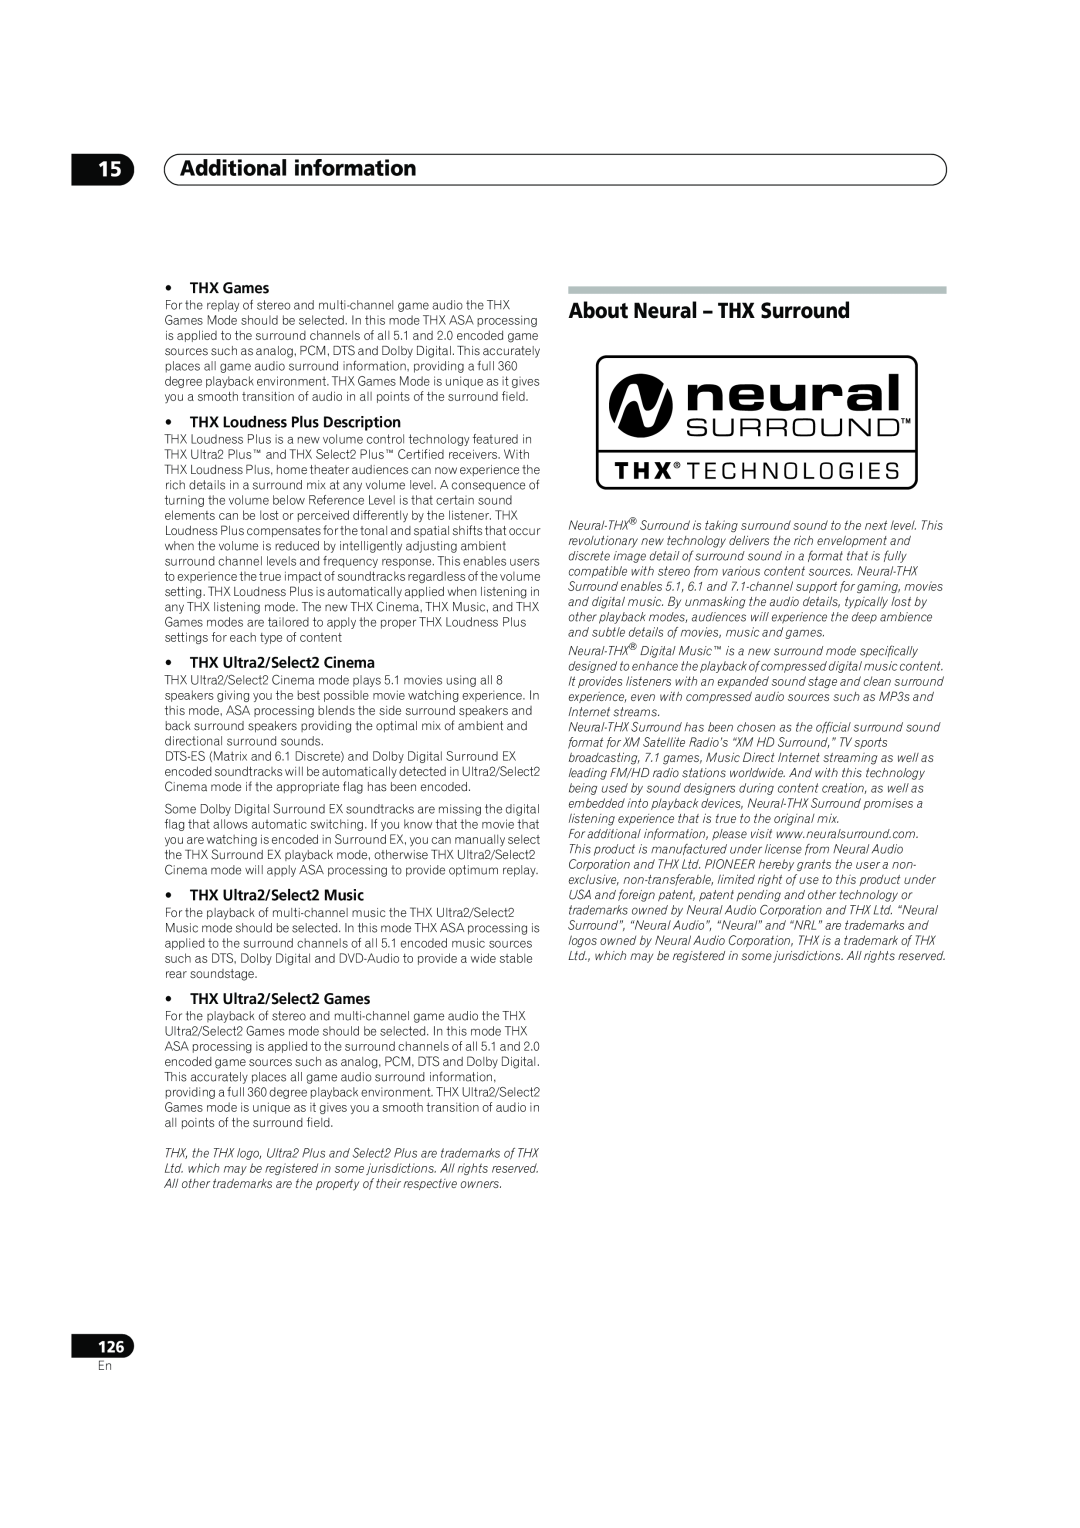 Pioneer SC-07, SC-05 manual About Neural - THX Surround, Additional information, THX Games, THX Loudness Plus Description 